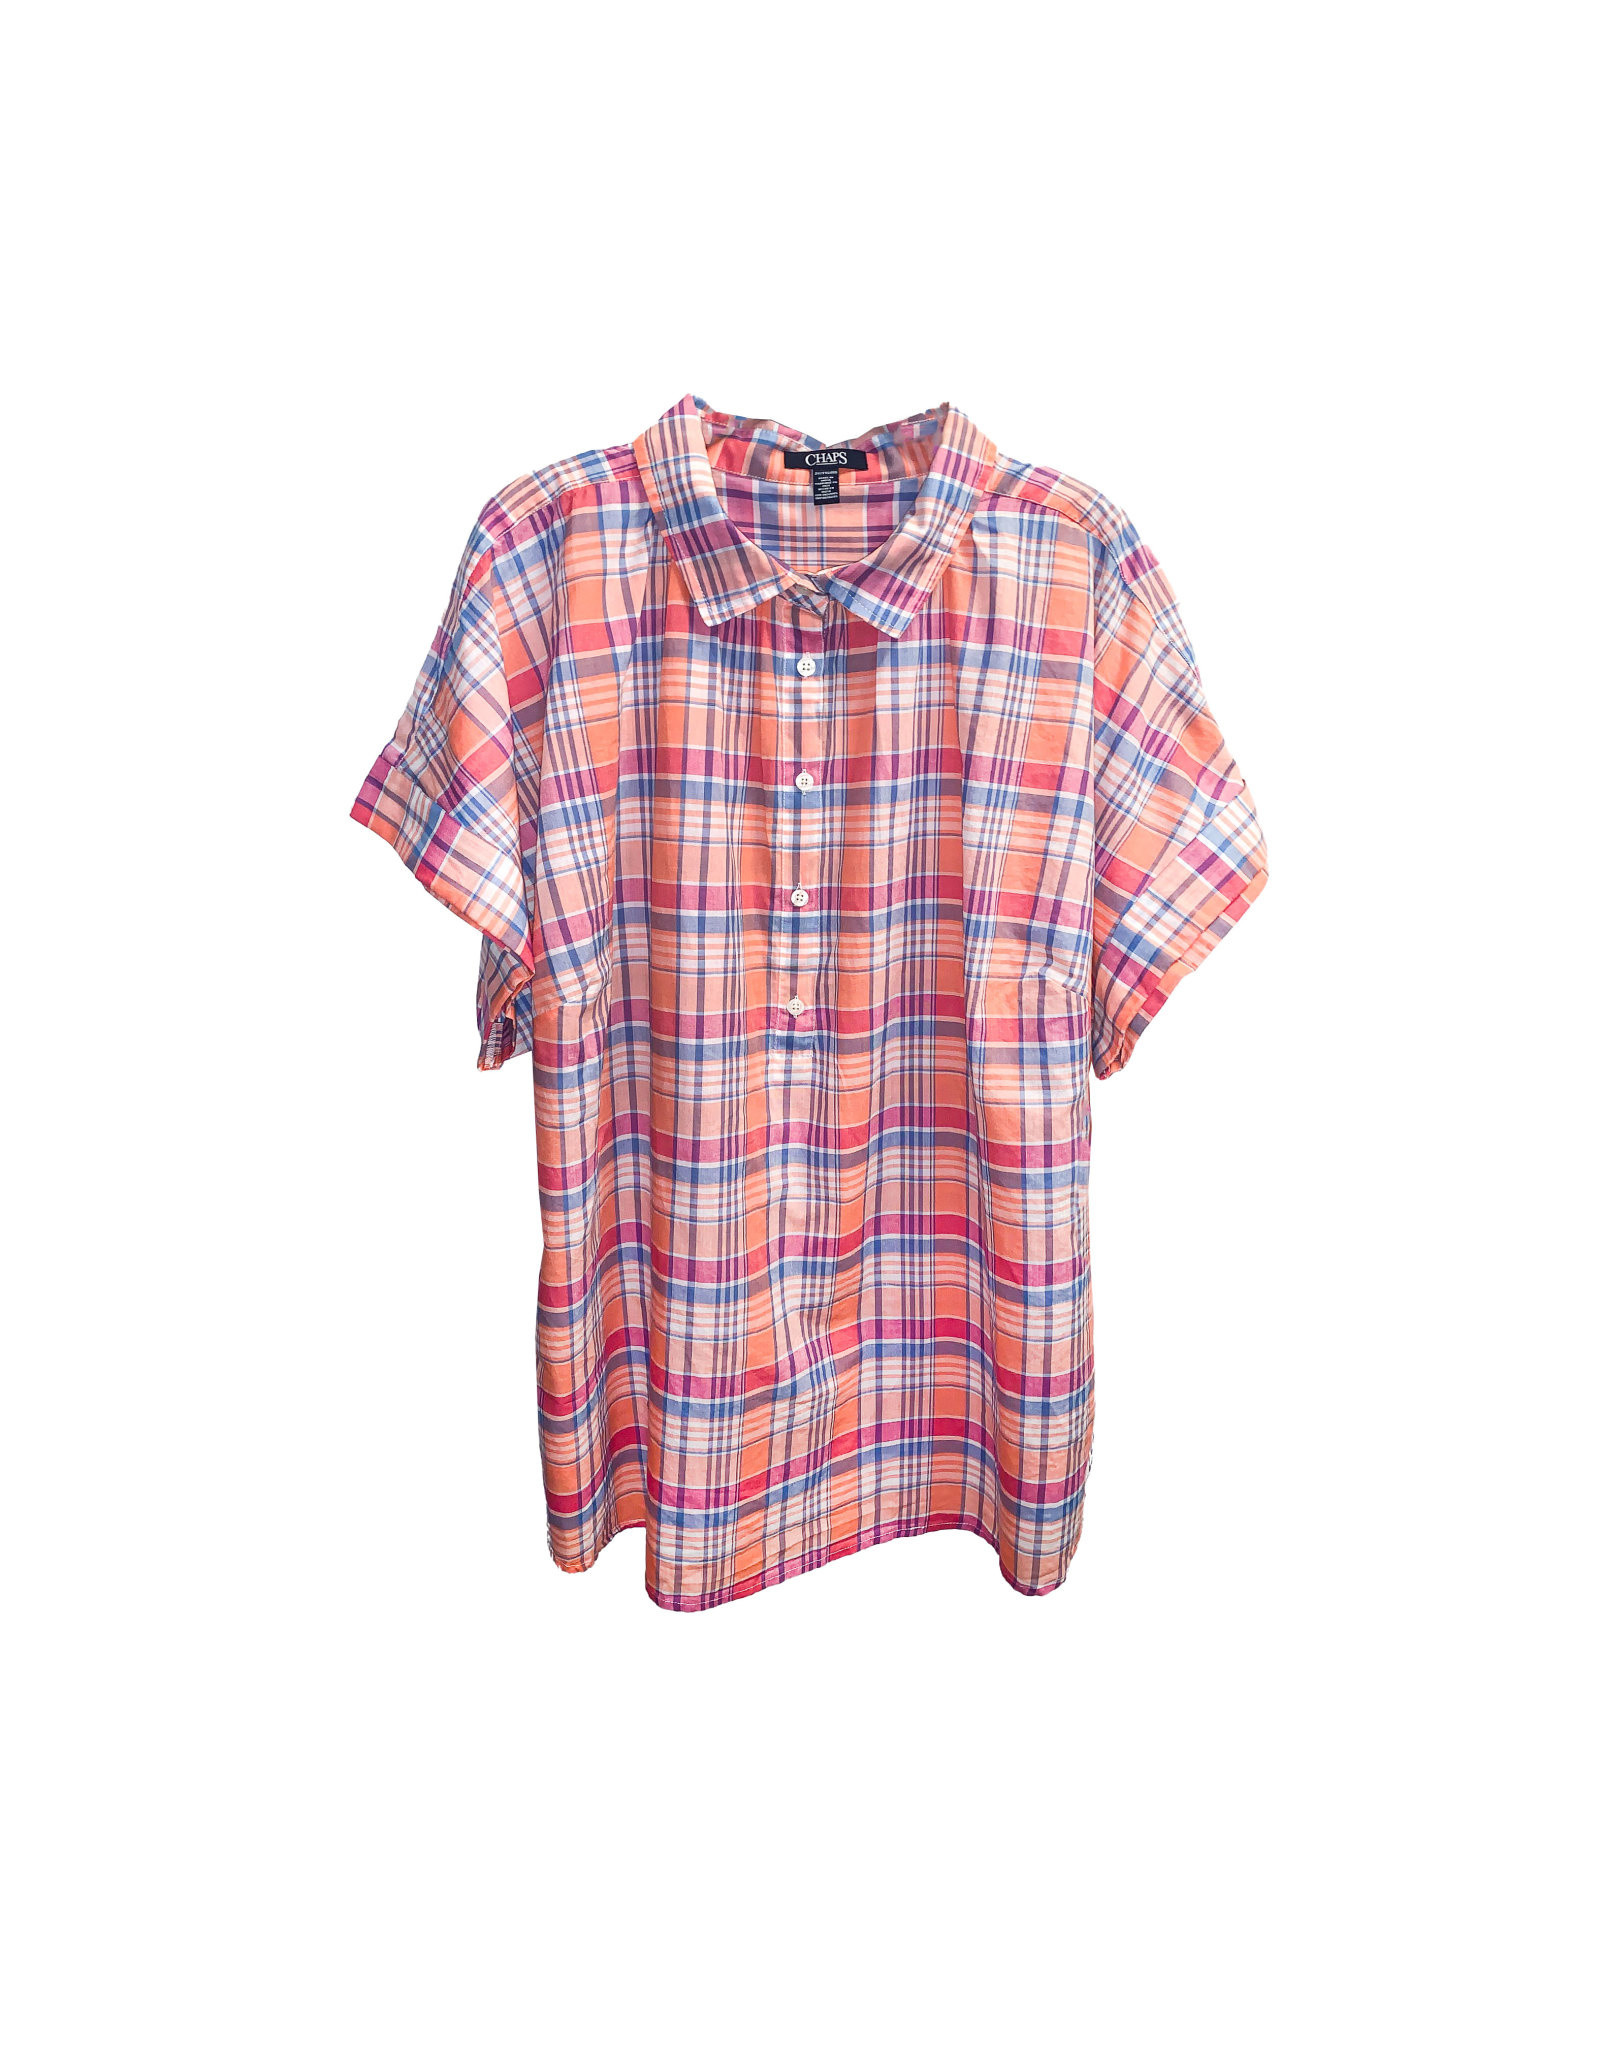 CHAPS Chaps Seymour-Short Sleeve Shirt Size: 2X